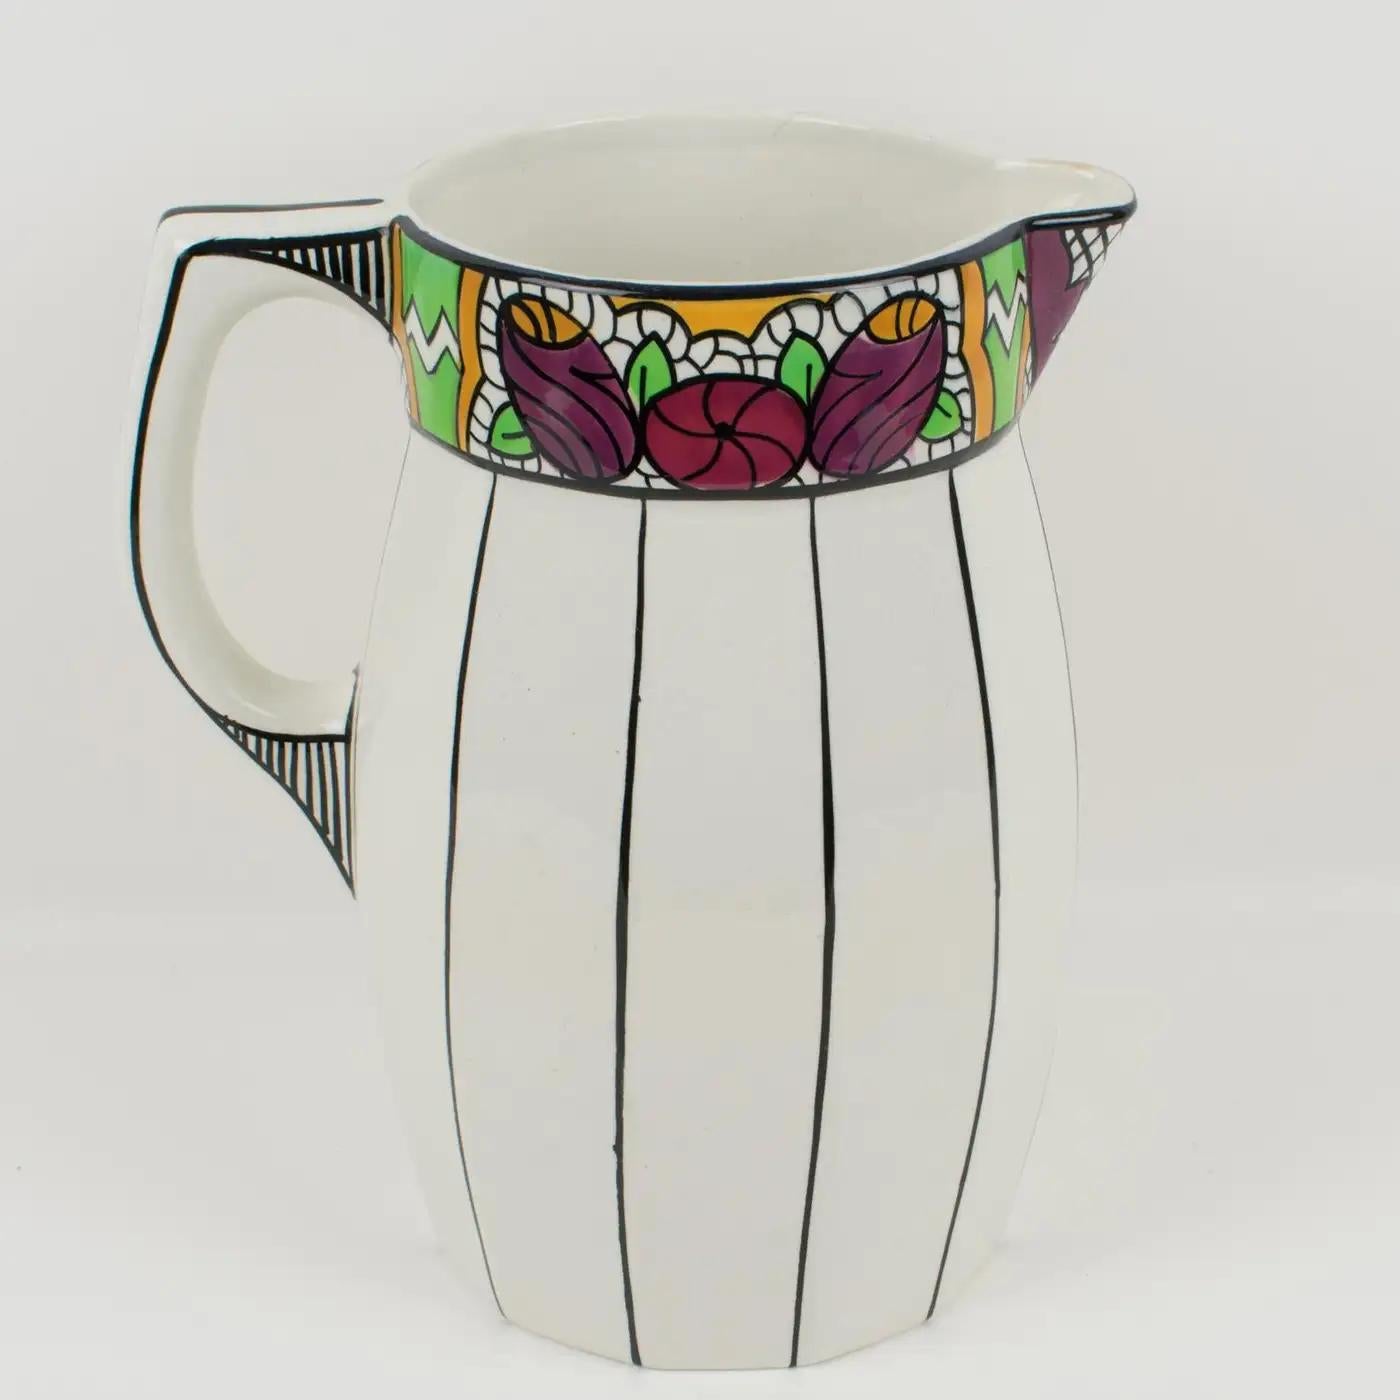 Art Deco Auguste Mouzin Ceramic Toiletry Dresser Bowl, Pitcher and Boxes Set For Sale 4